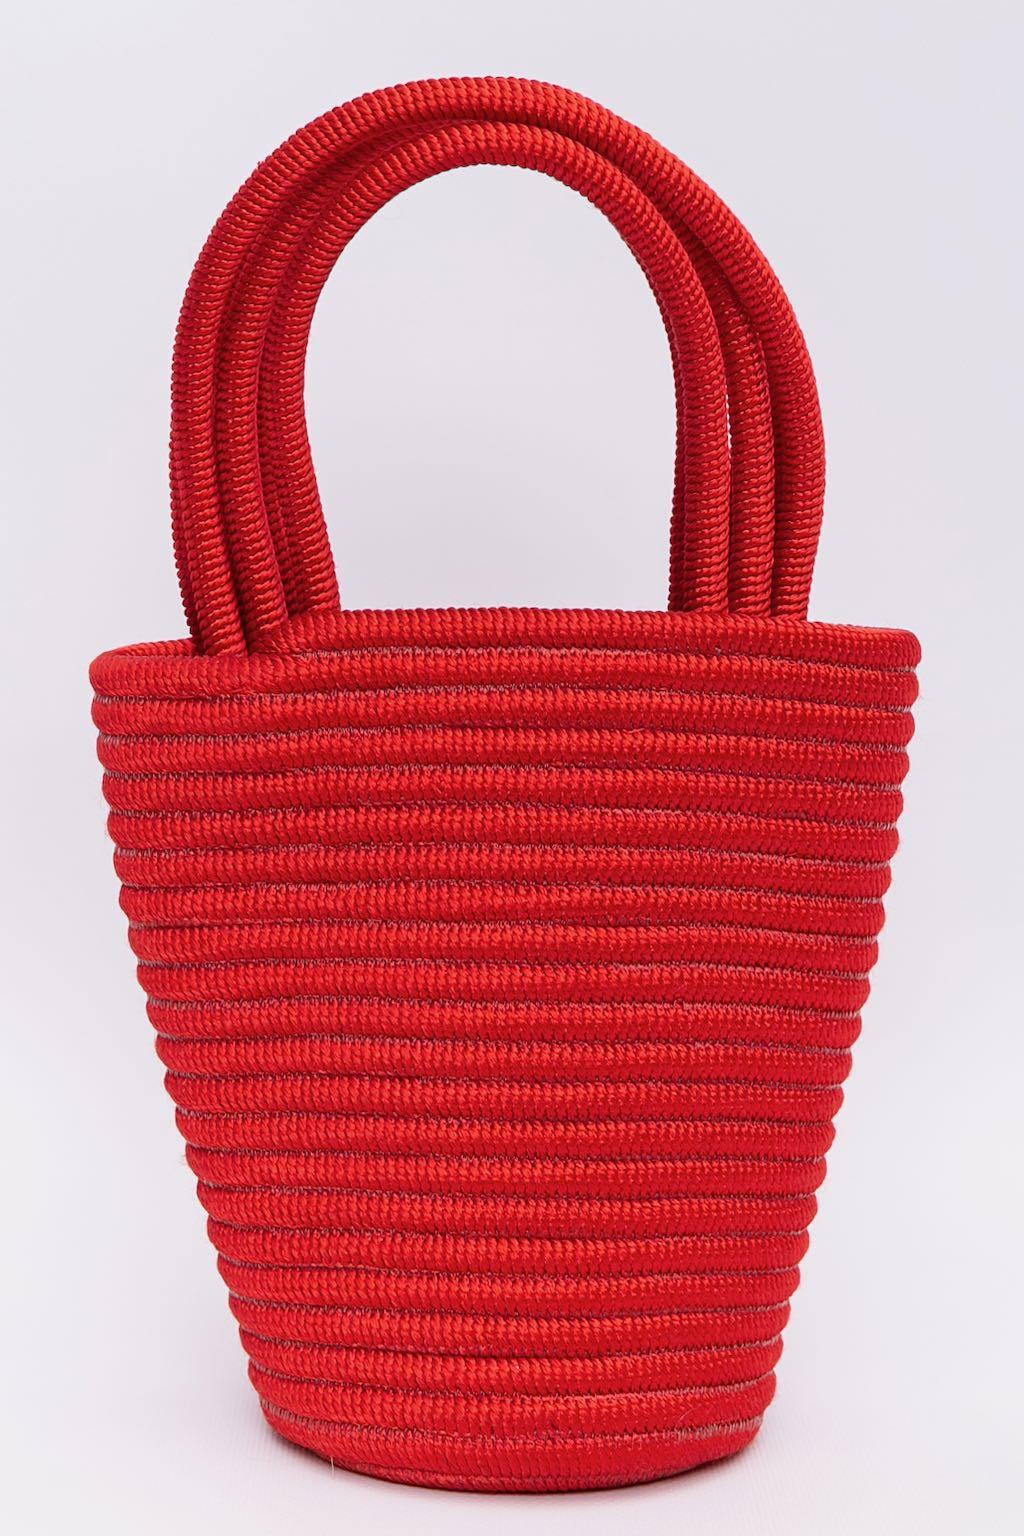 Nina Ricci Passementerie Red Bag In Excellent Condition For Sale In SAINT-OUEN-SUR-SEINE, FR